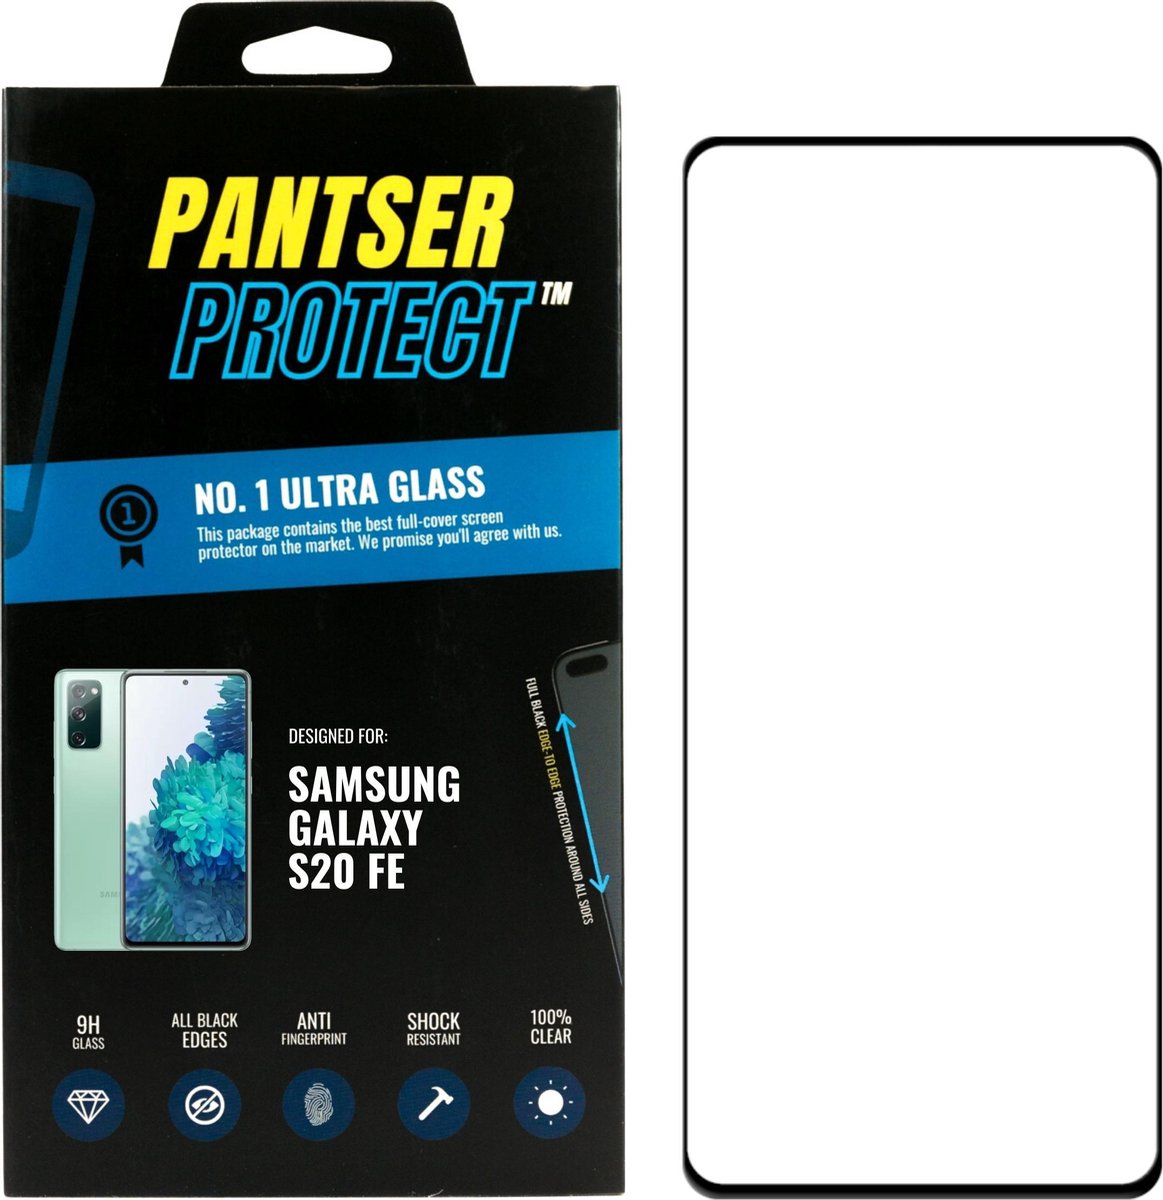 Pantser Protect ™ Case Friendly Screenprotector Geschikt voor Samsung Galaxy S20 FE (Fan Edition) - Premium glazen full-cover Pantserglas Protector - Tempered Glass Bescherm Glas